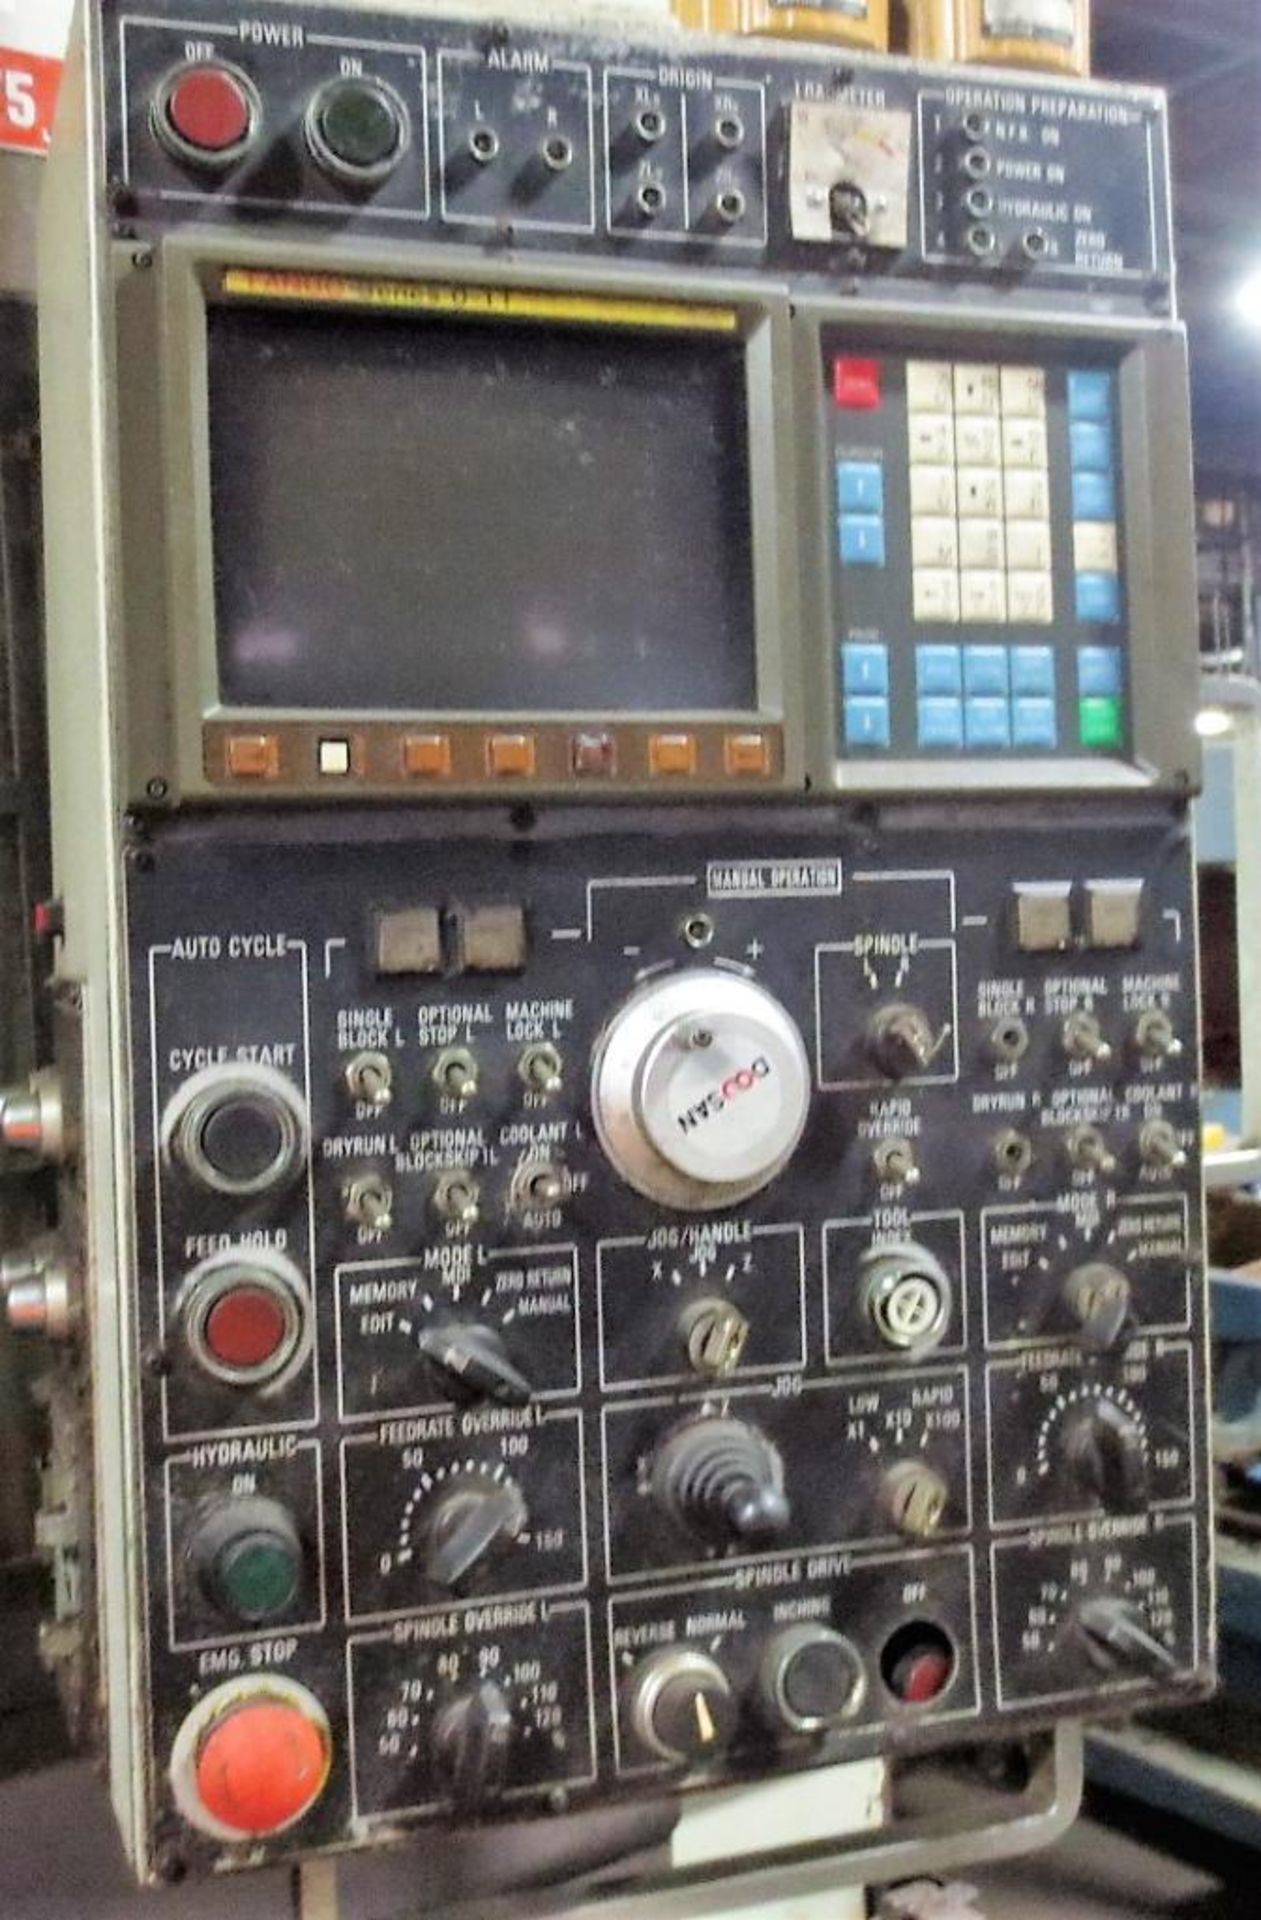 Doosan Model Dooturn-25P-V5 Vertical CNC Turning Center, S/N LTD0015. Loading Fee is $950.00 - Image 4 of 8